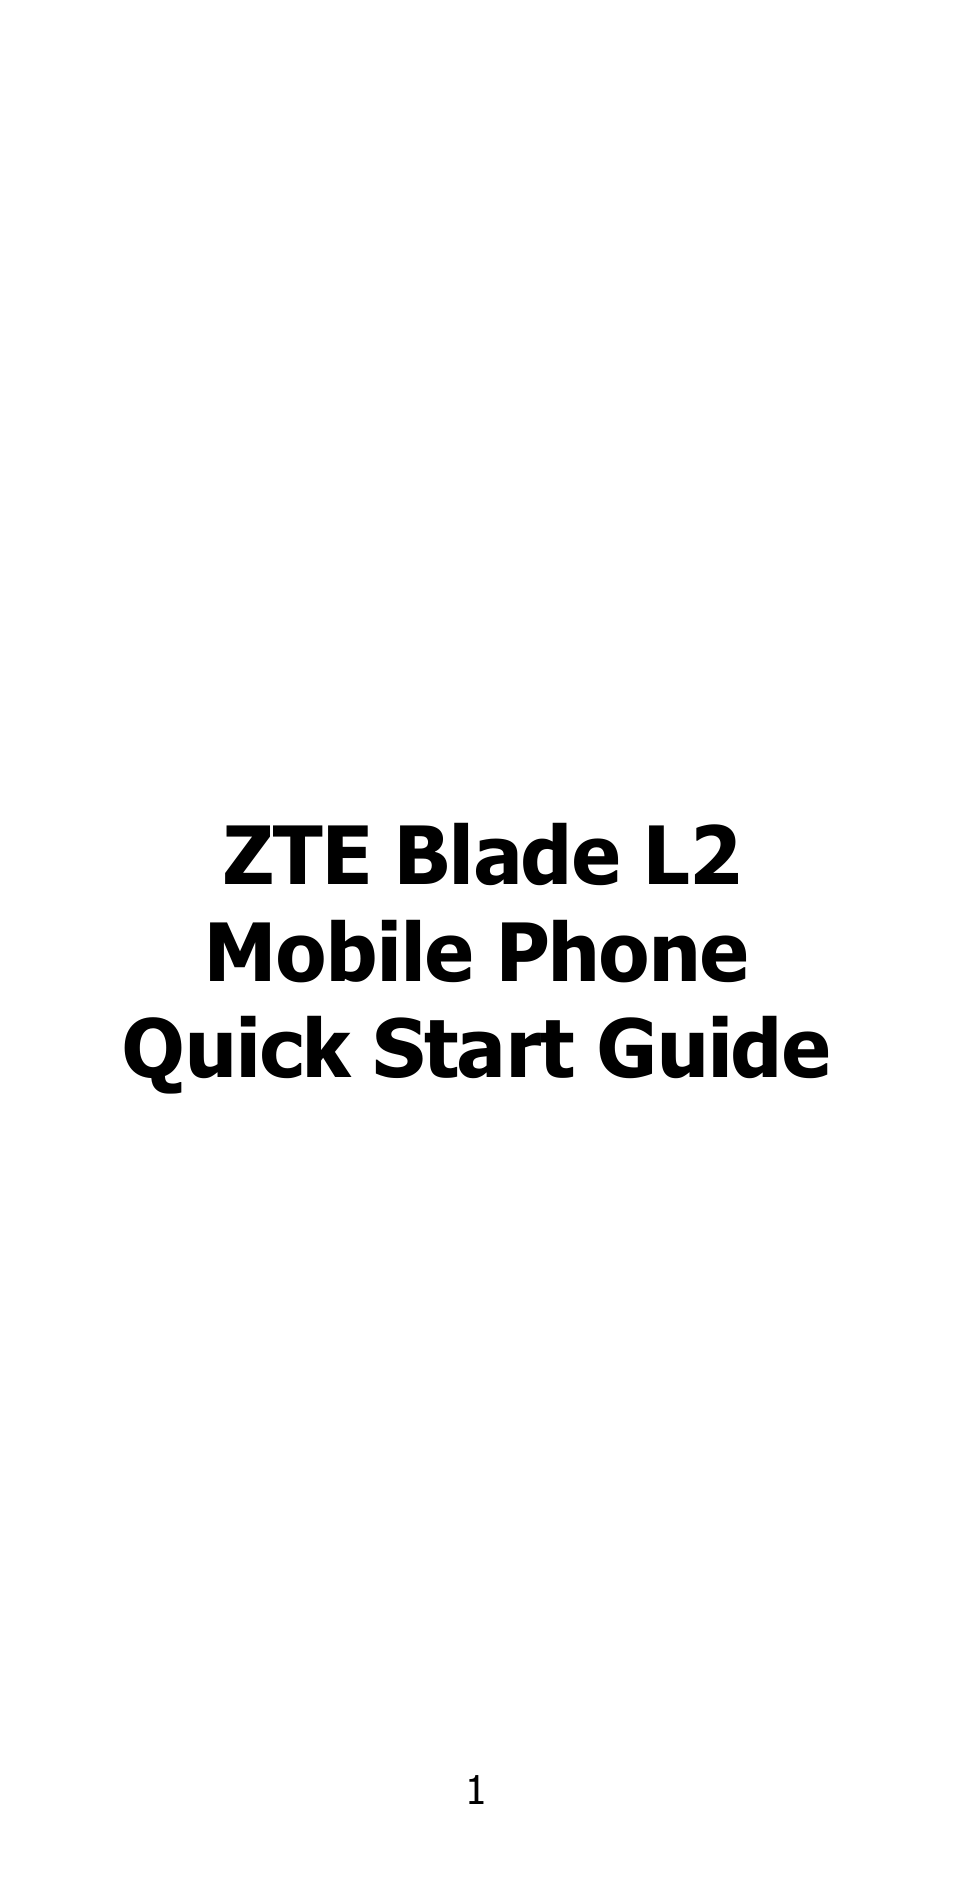 Blade L2